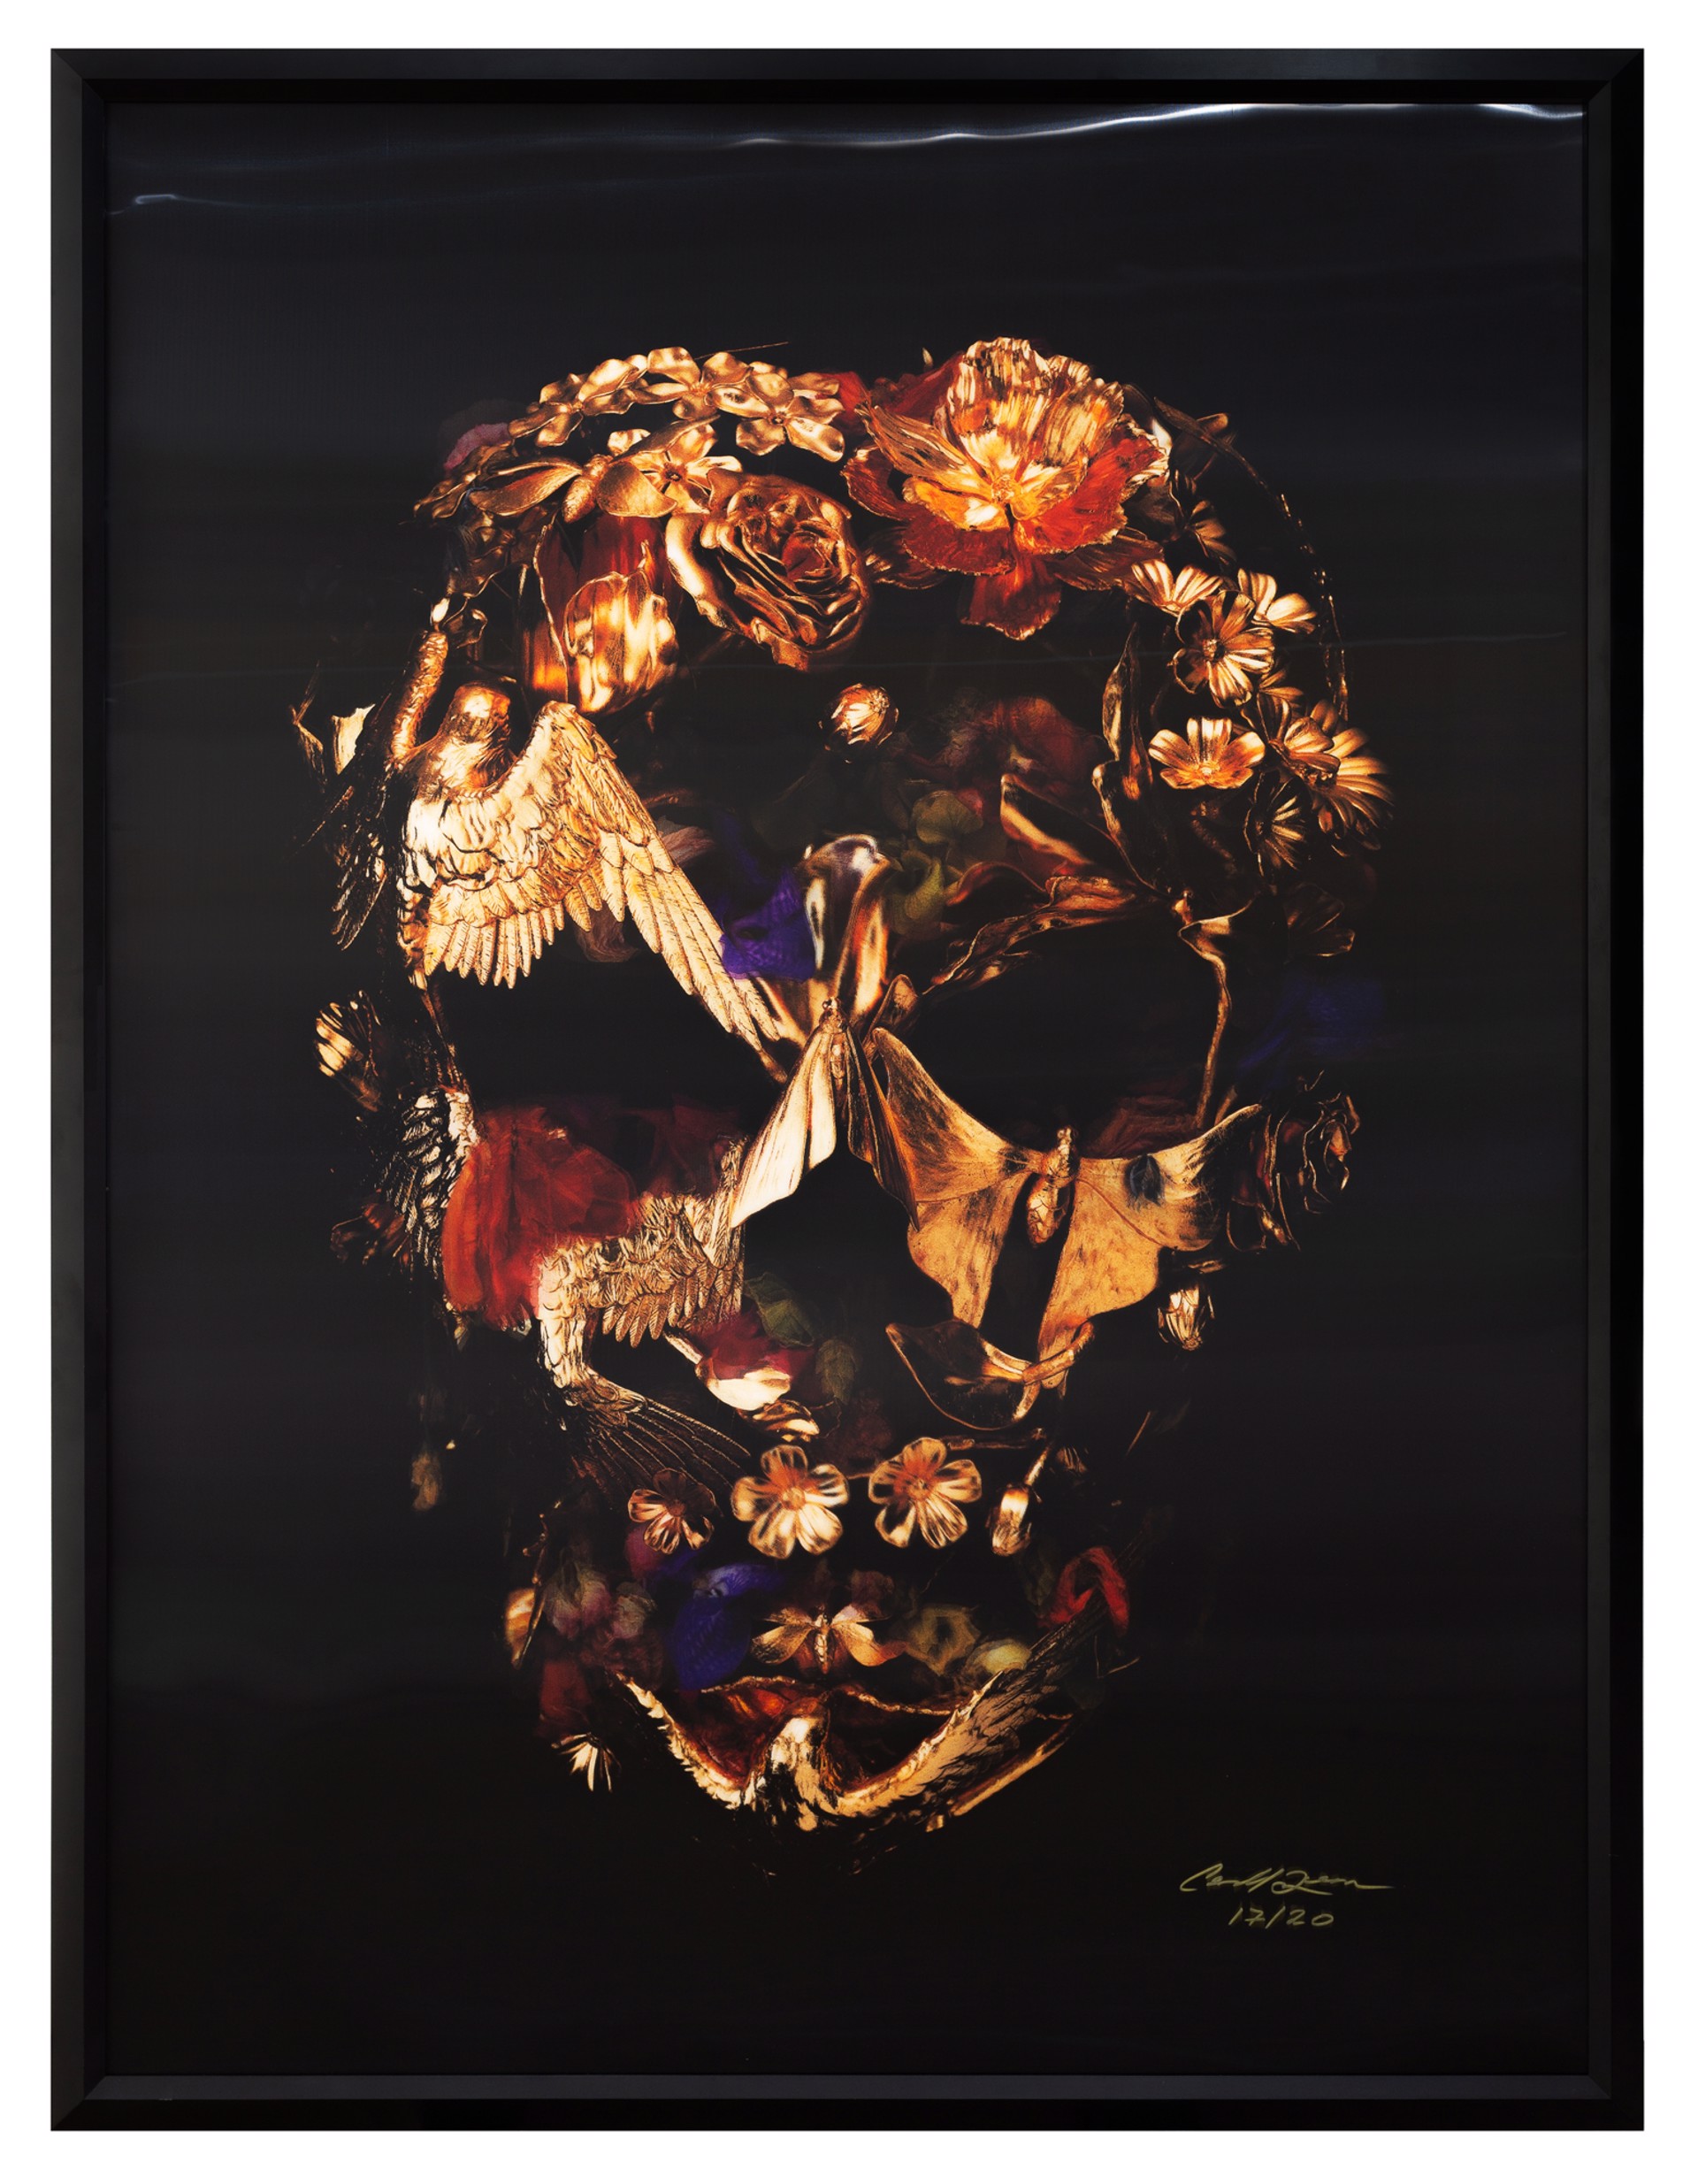 The Vanitas Skull by Gary James McQueen